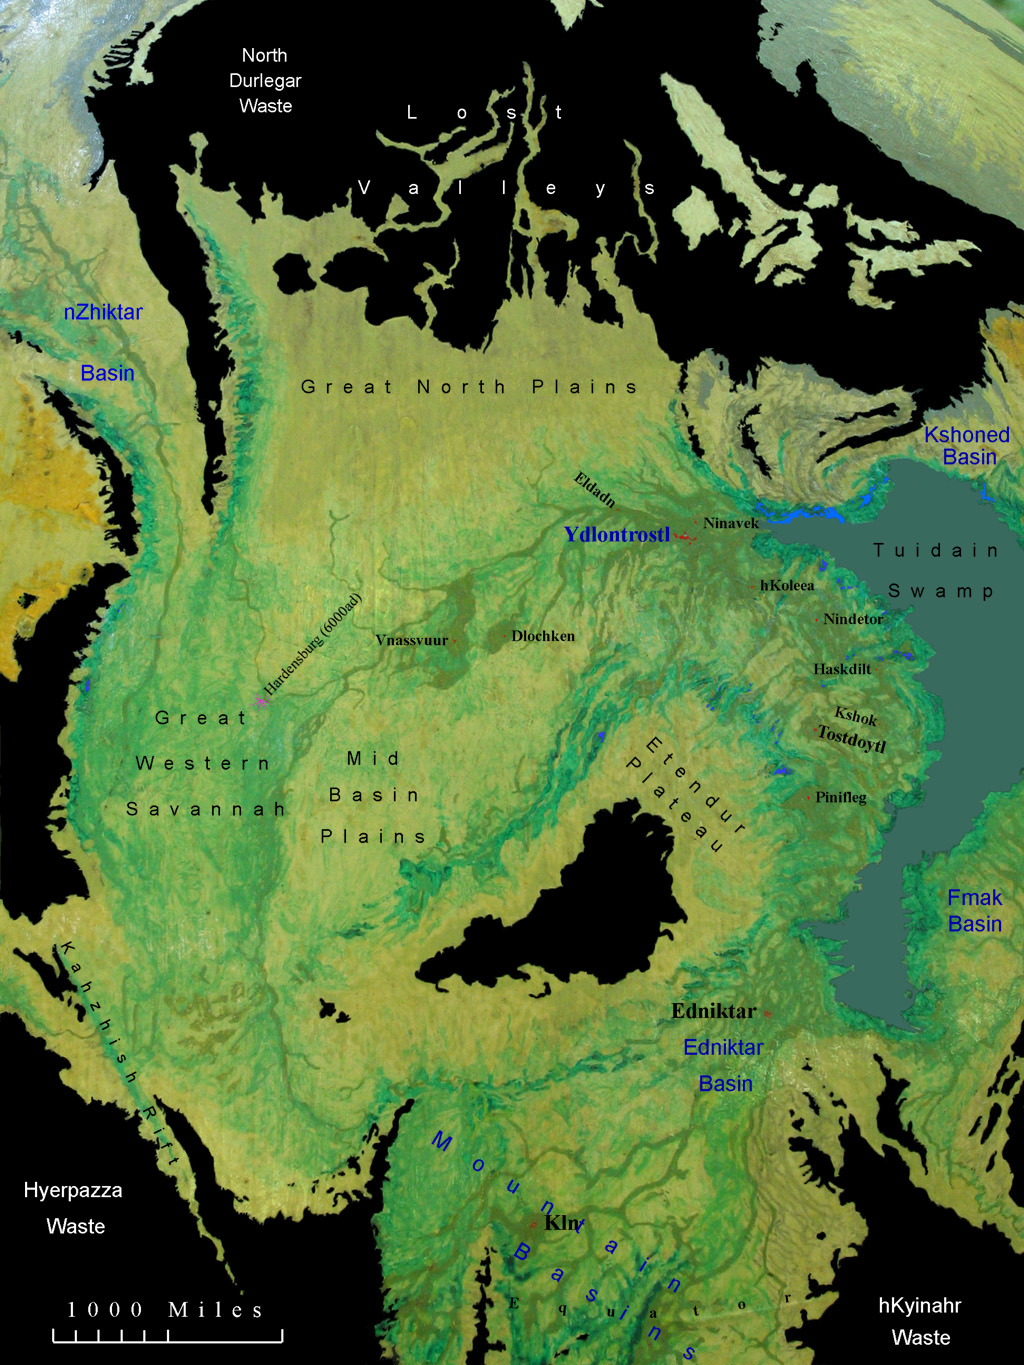 Map of the Ydlontrostl Basin